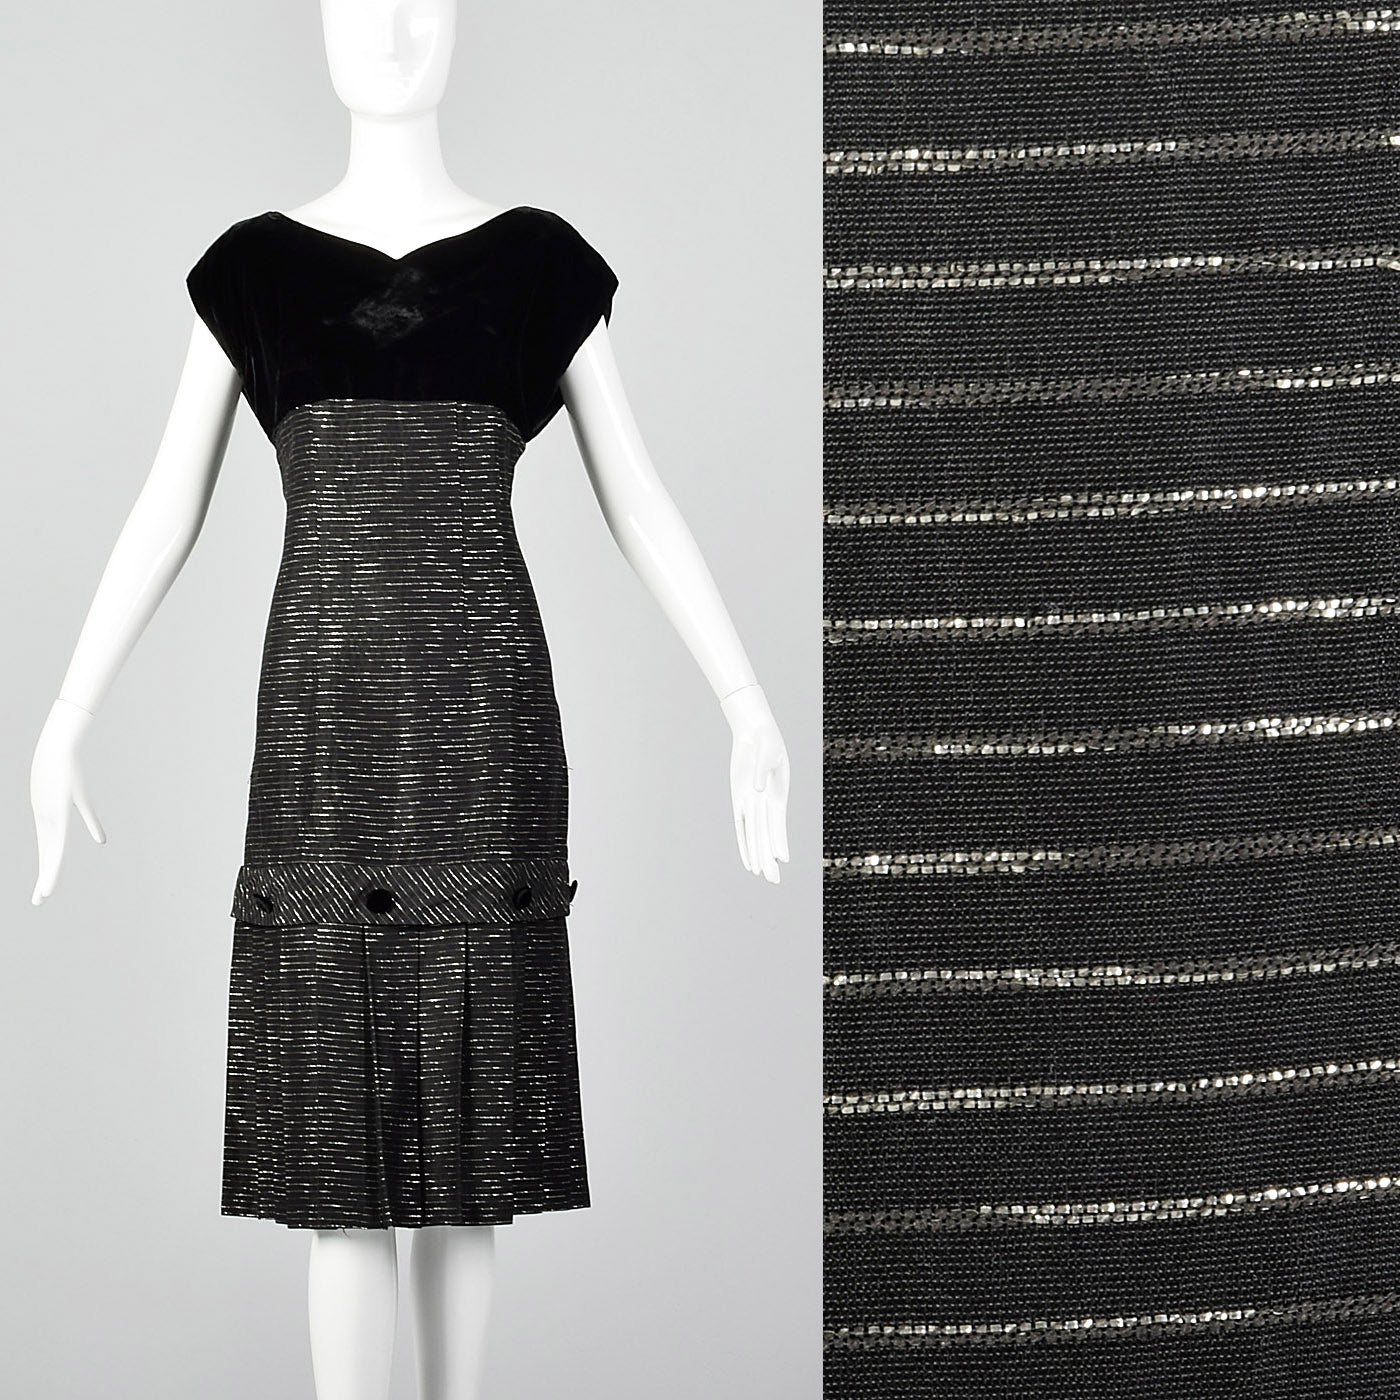 1950s Black Cocktail Dress with Metallic Stripes